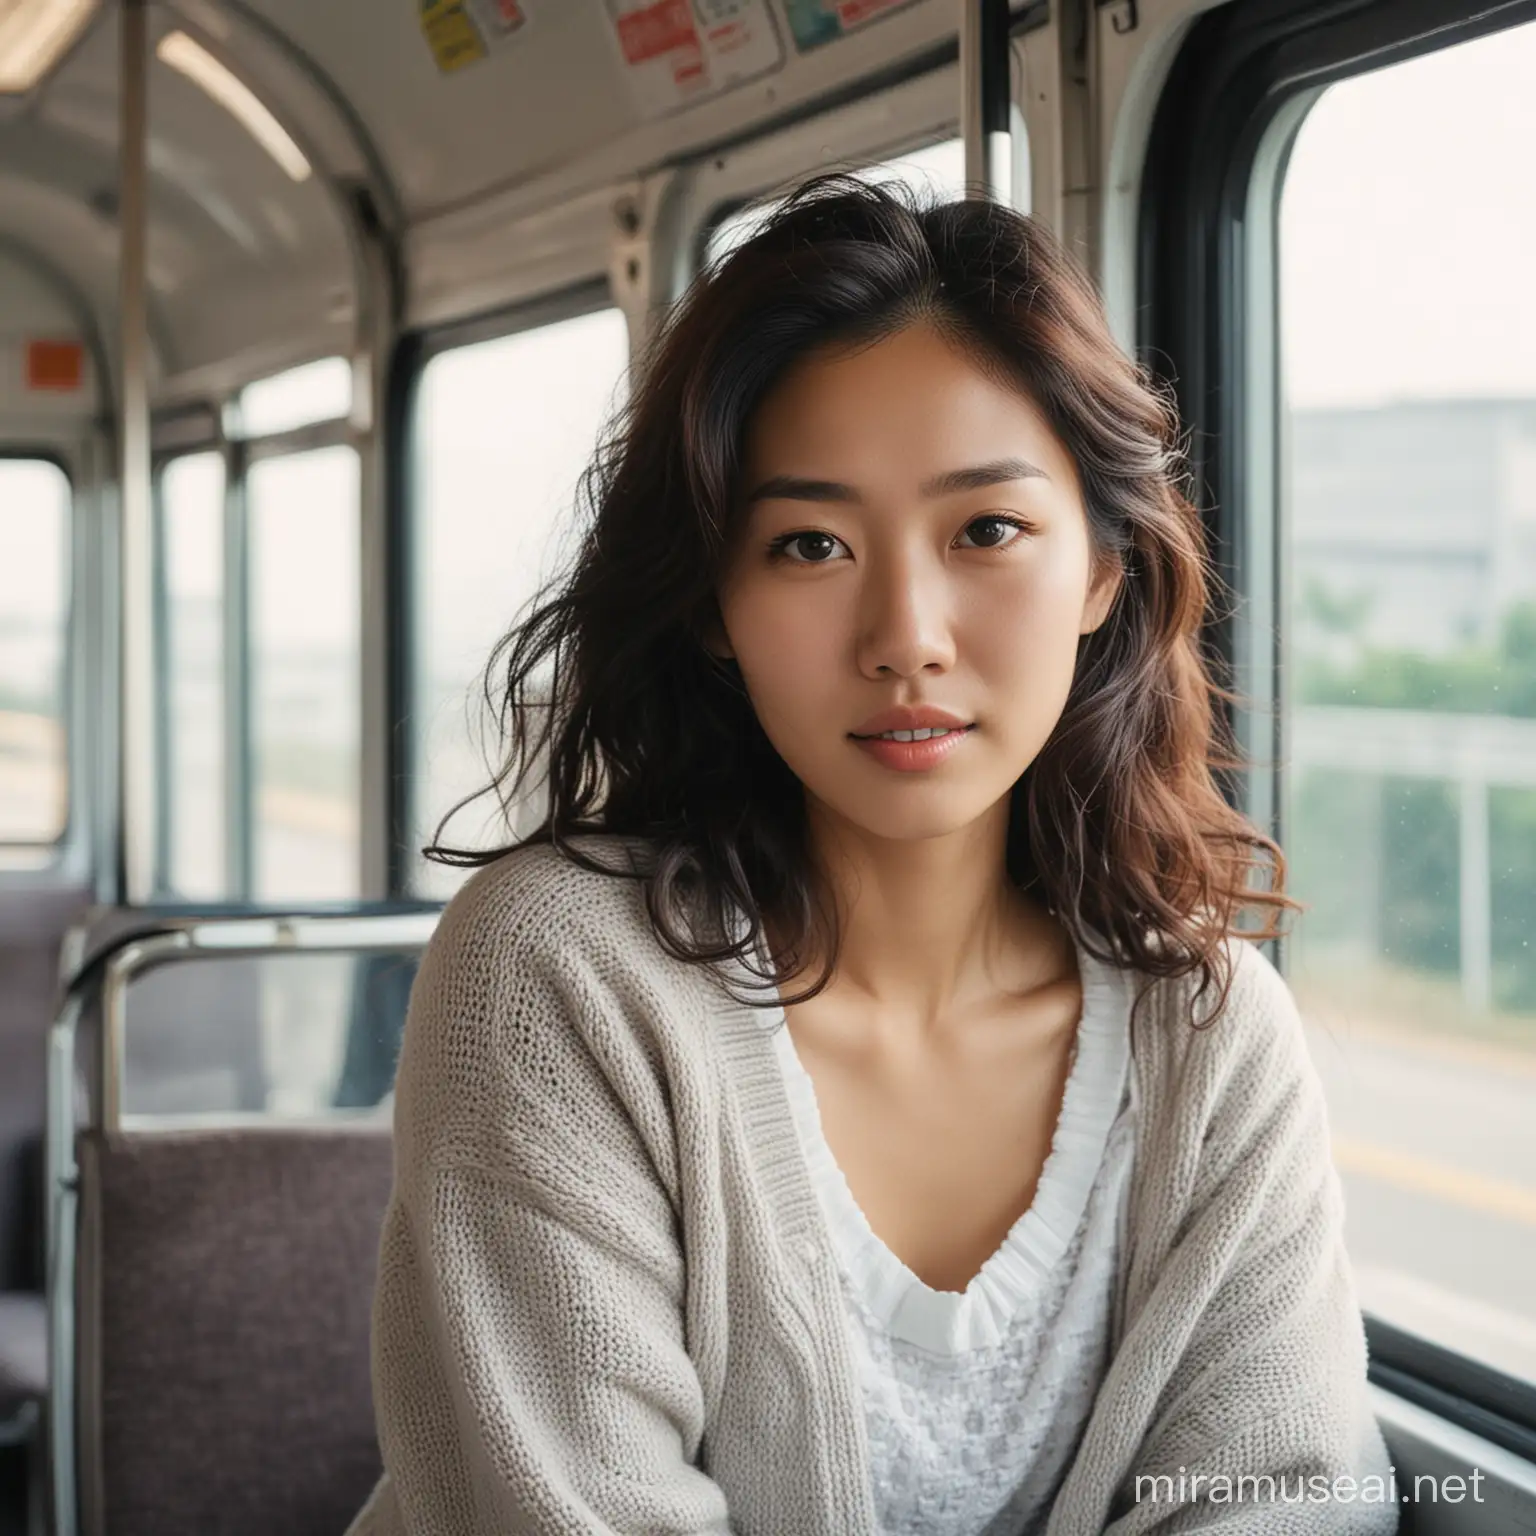 abeauty asian woman, wavy hair, knit clothe, sitting, inside bus, morning